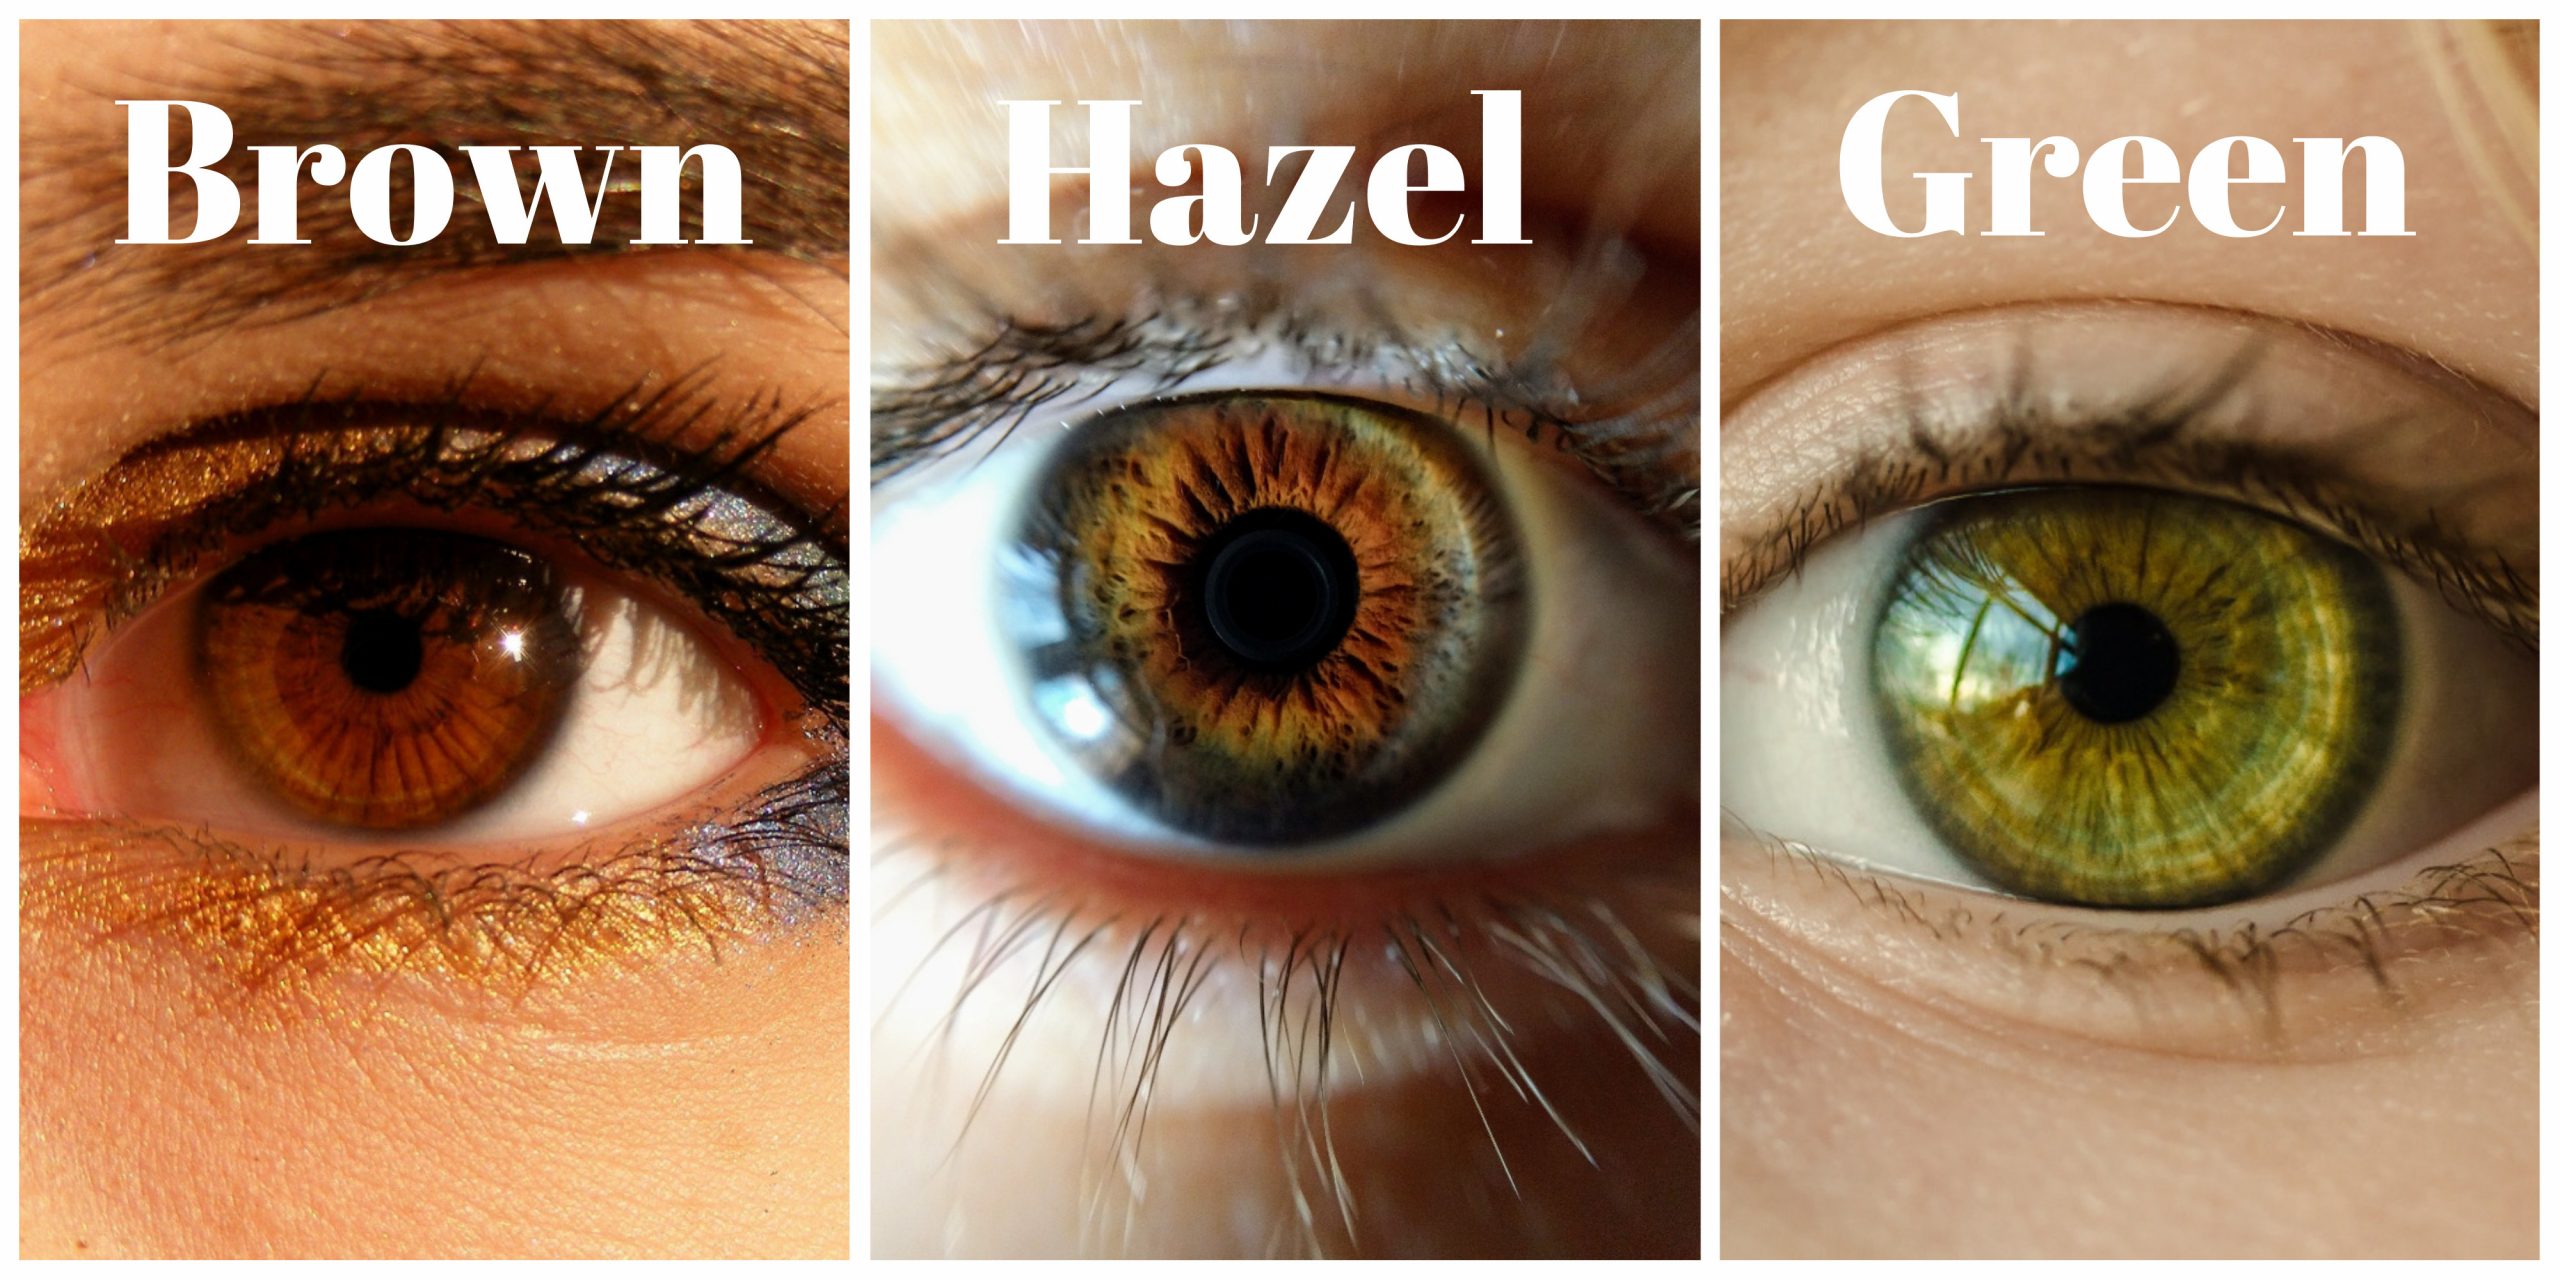 Hazel Eye Color Rare What are hazel eyes considered? - iTRUST